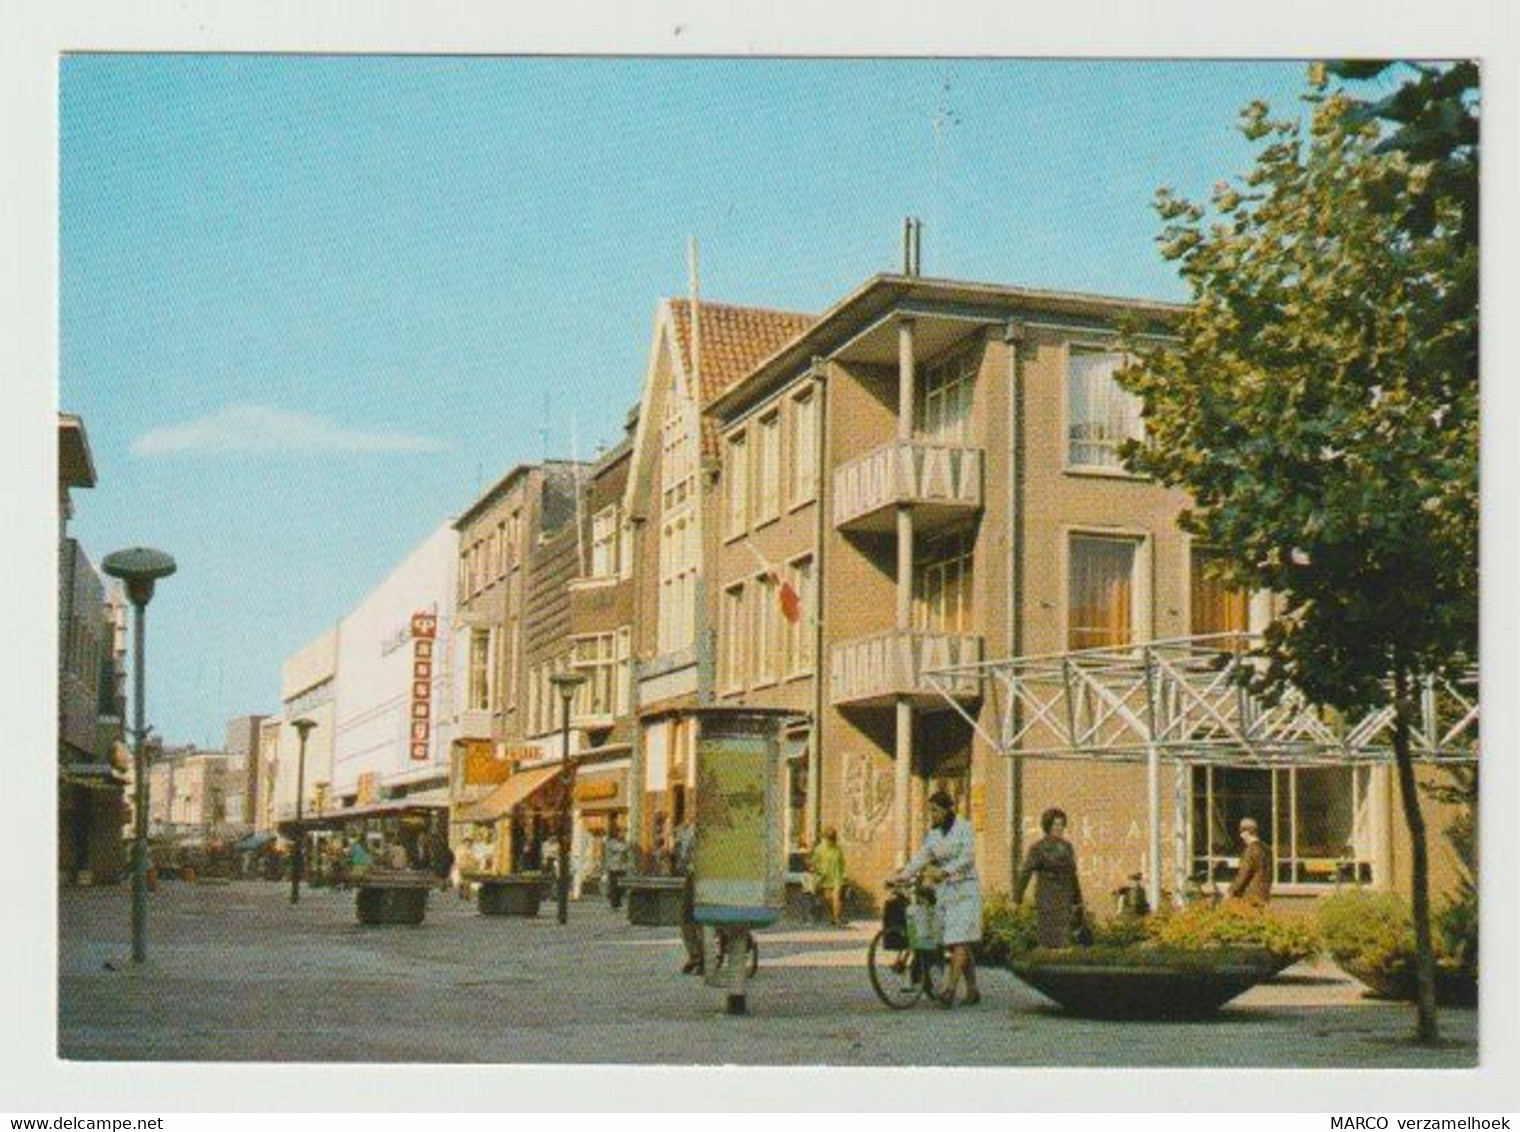 Postcard-ansichtkaart: Veestraat Helmond (NL) 1974 - Helmond